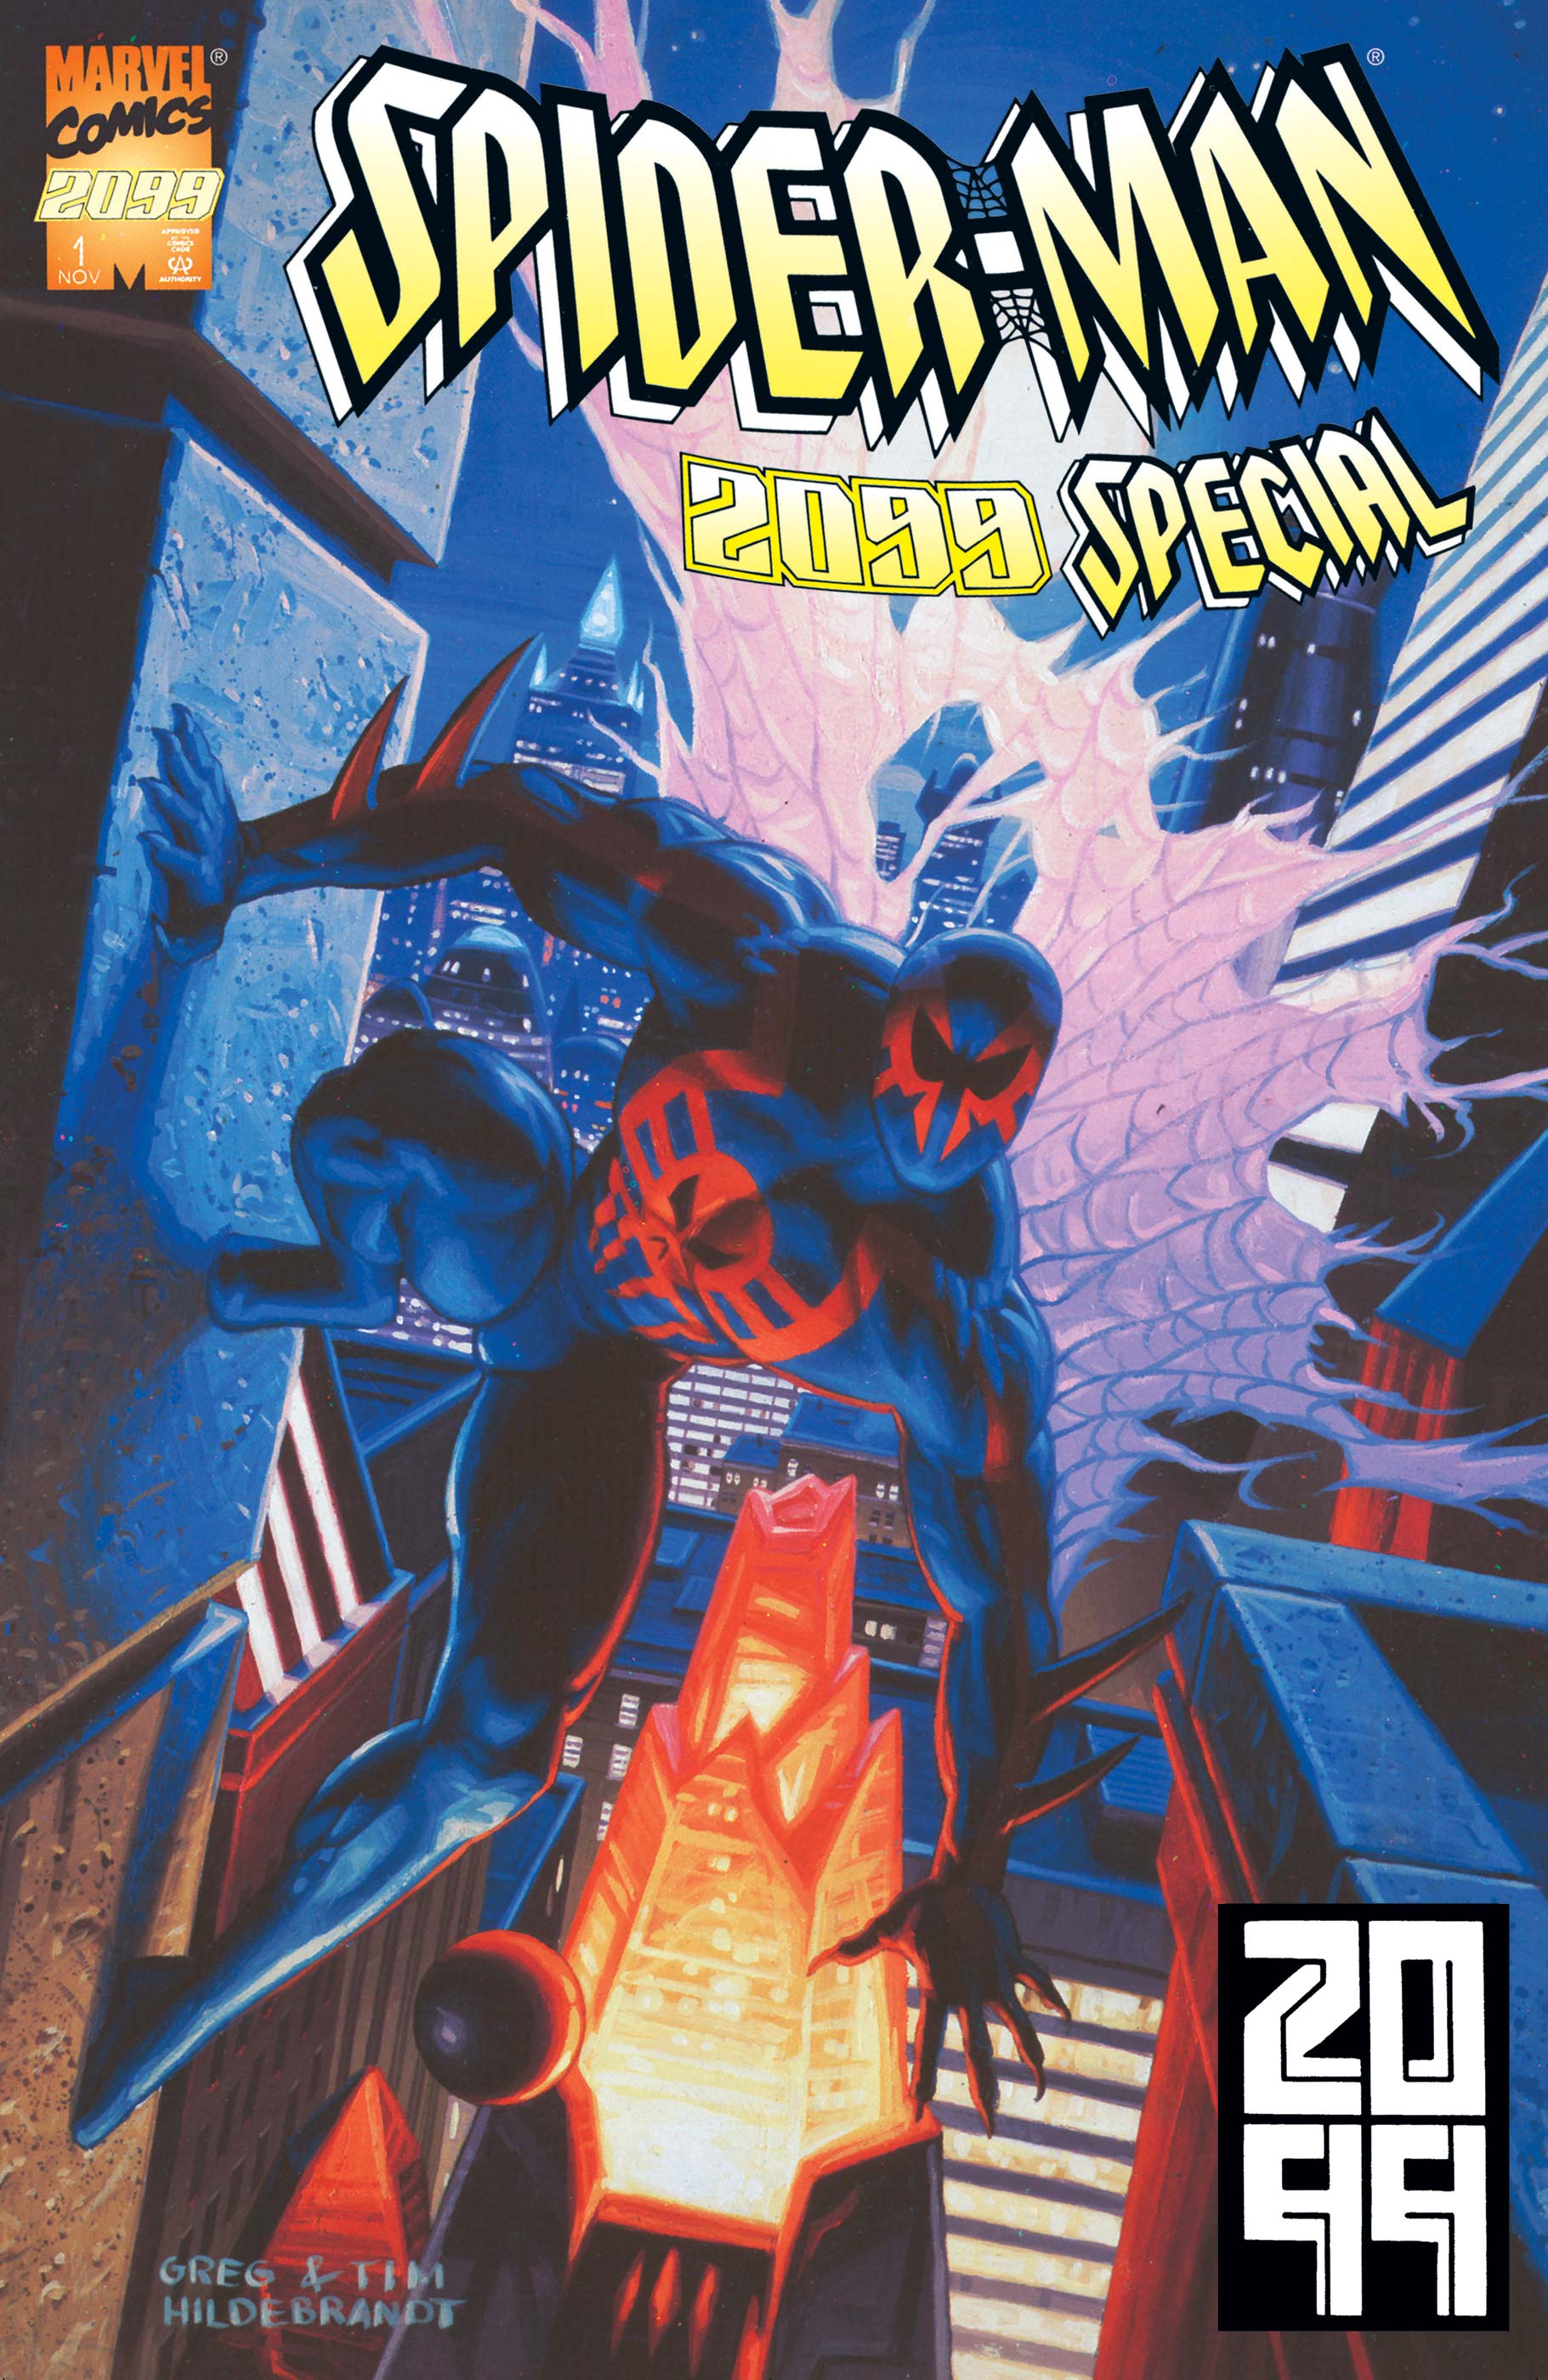 Spider-Man 2099 Special (1995) #1